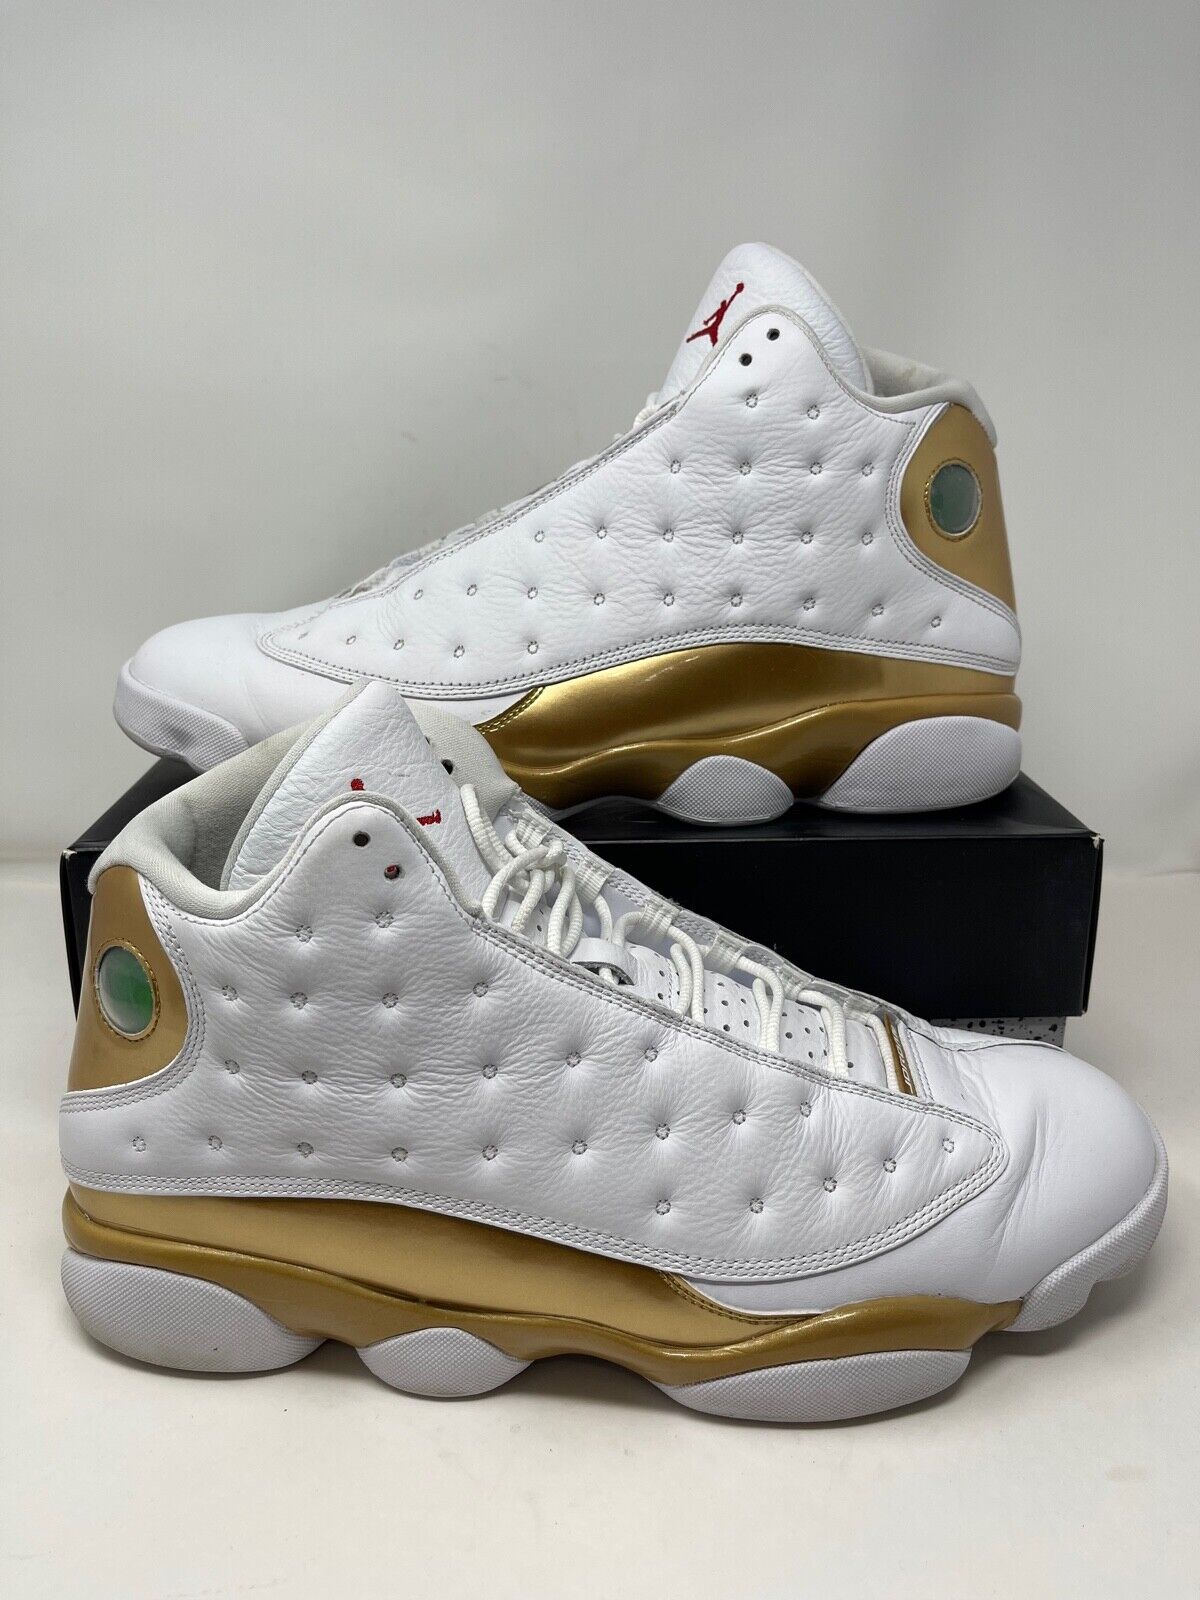 Nike Air Jordan 13 Retro Defining Moments DMP Gold 414571 135 Size 14